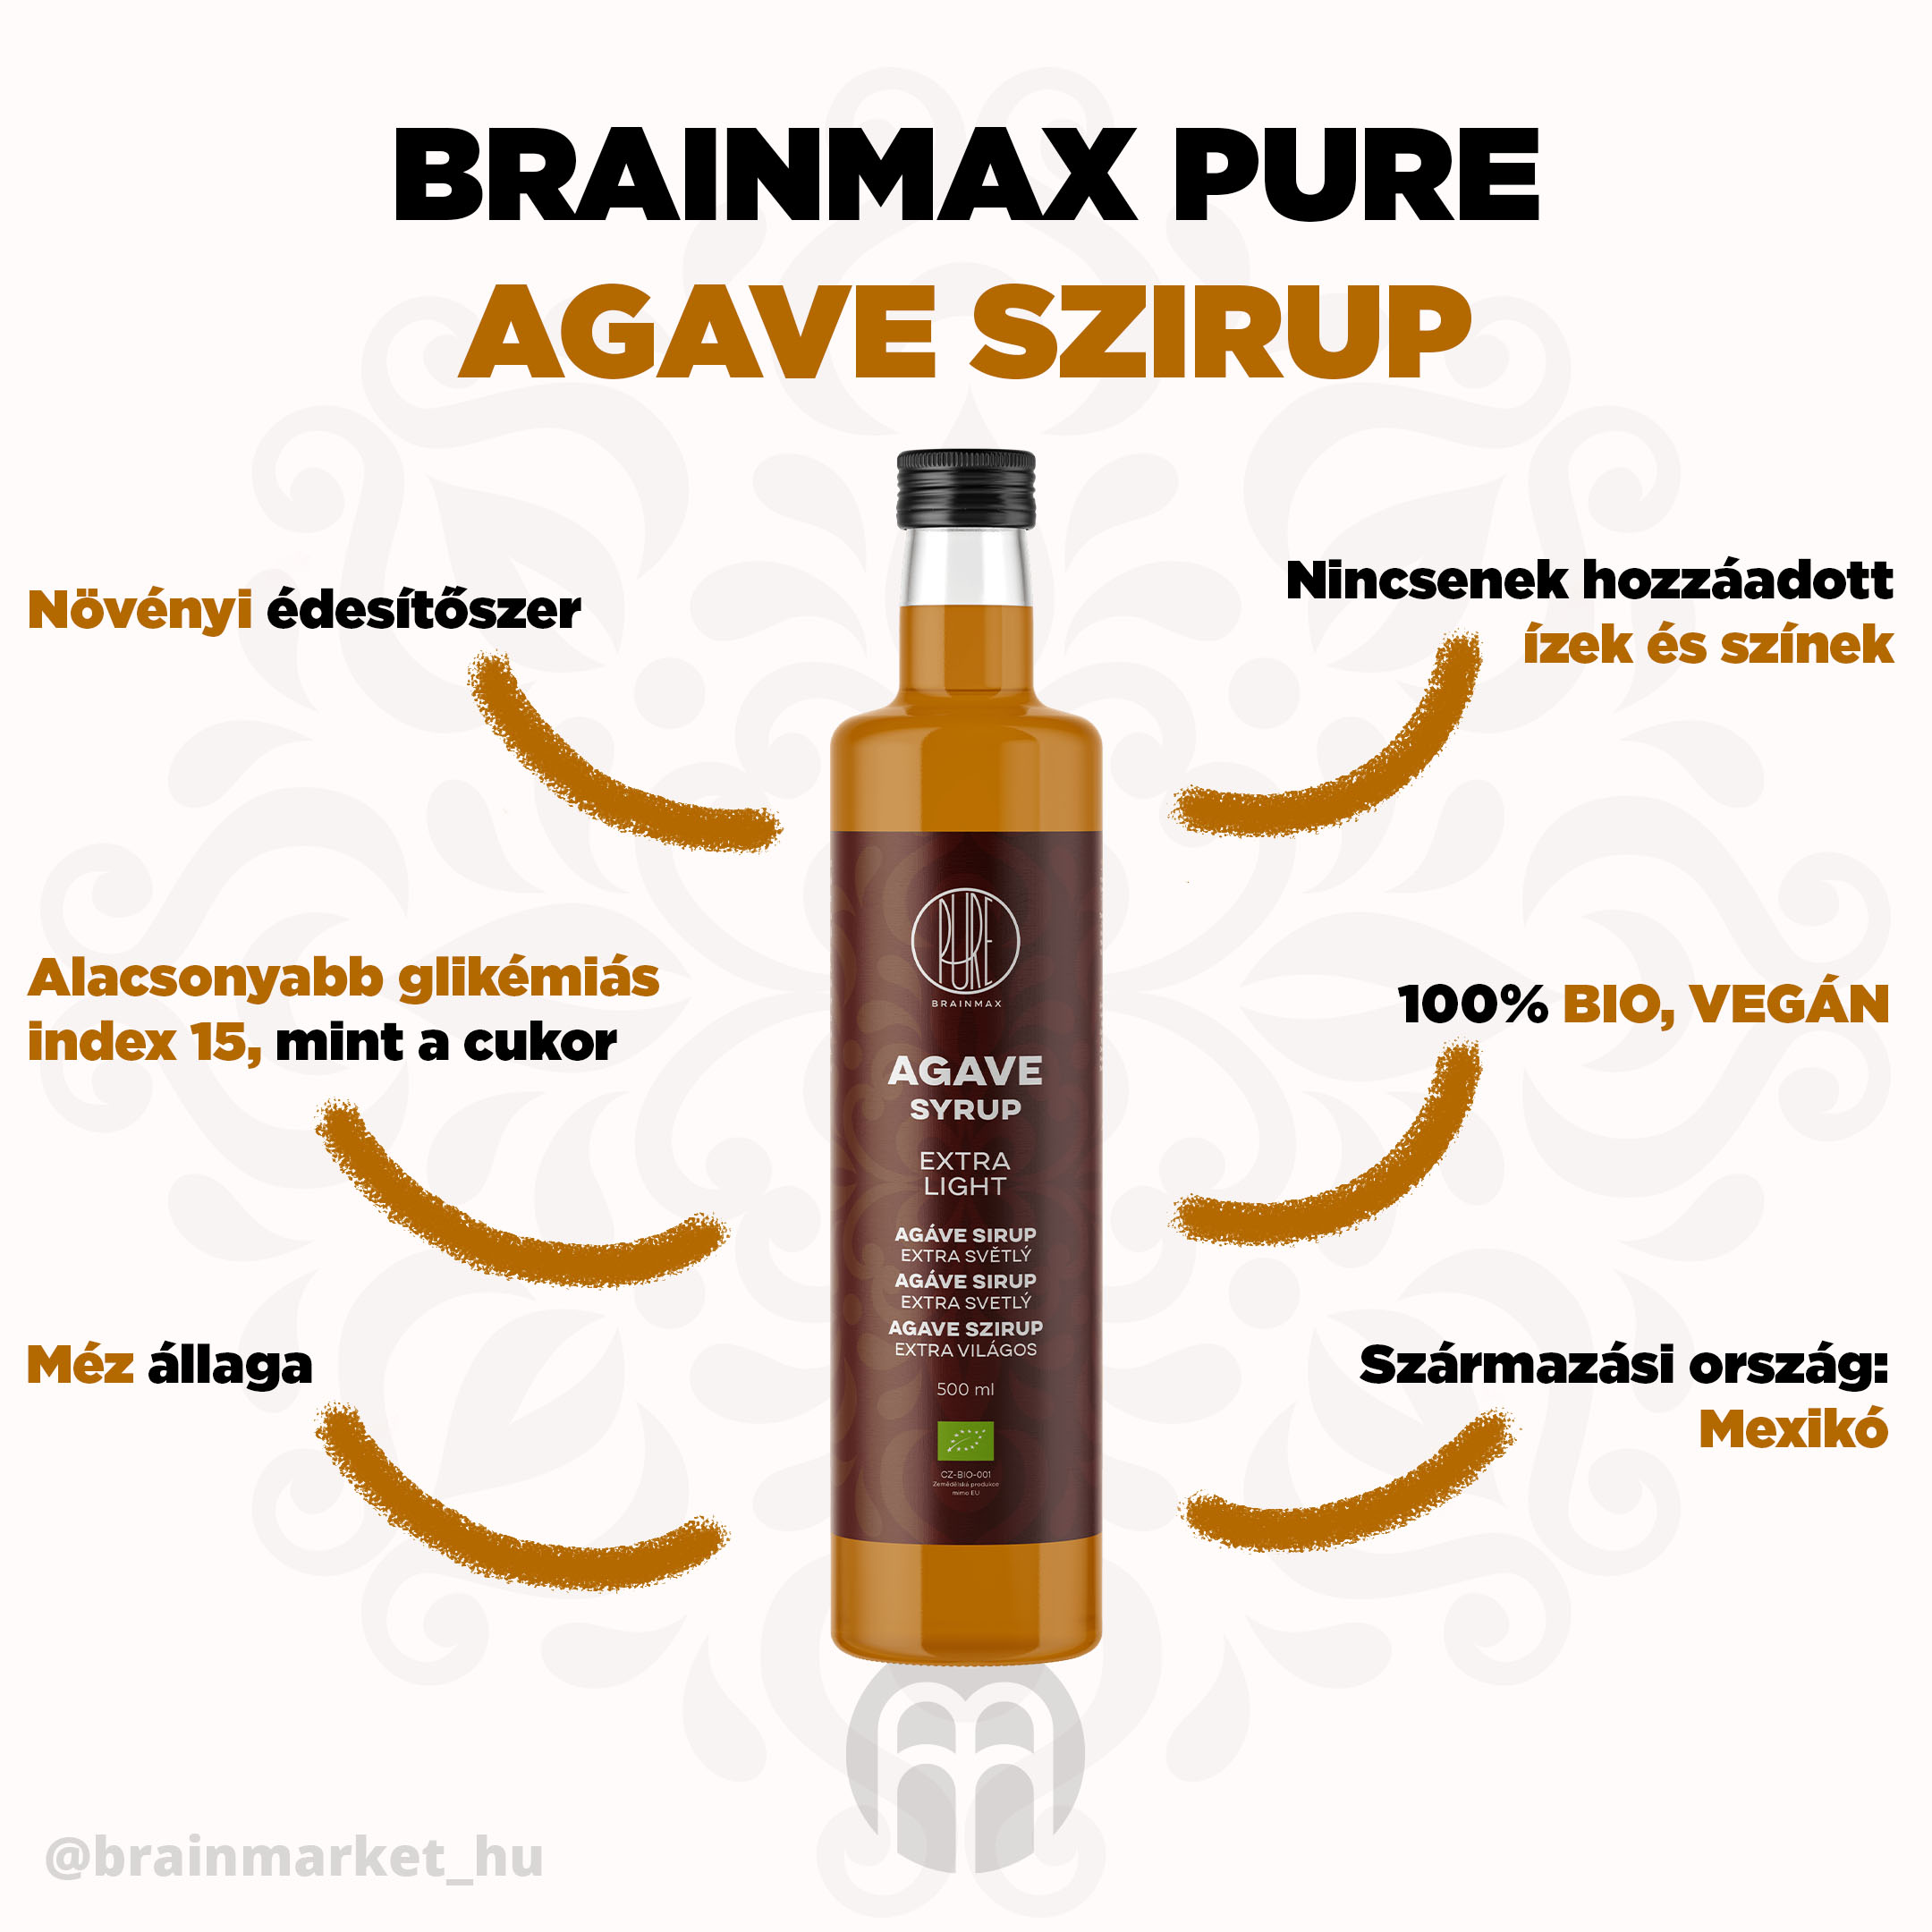 brainmax pure agave sirup infografika brainmarket HU